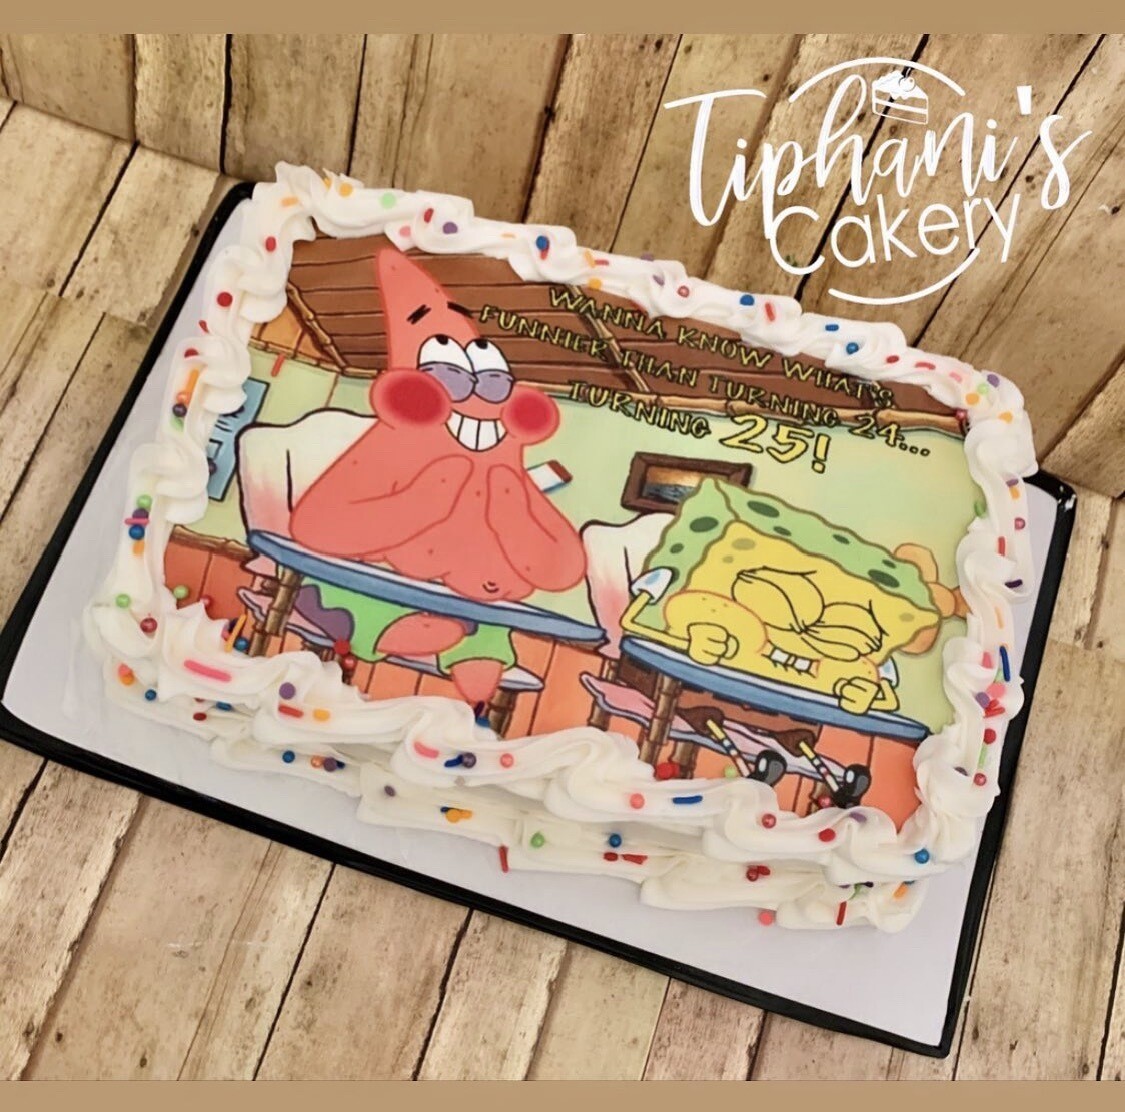 Spongebob Meme 1/4 Sheet Cake (serves 12-15)